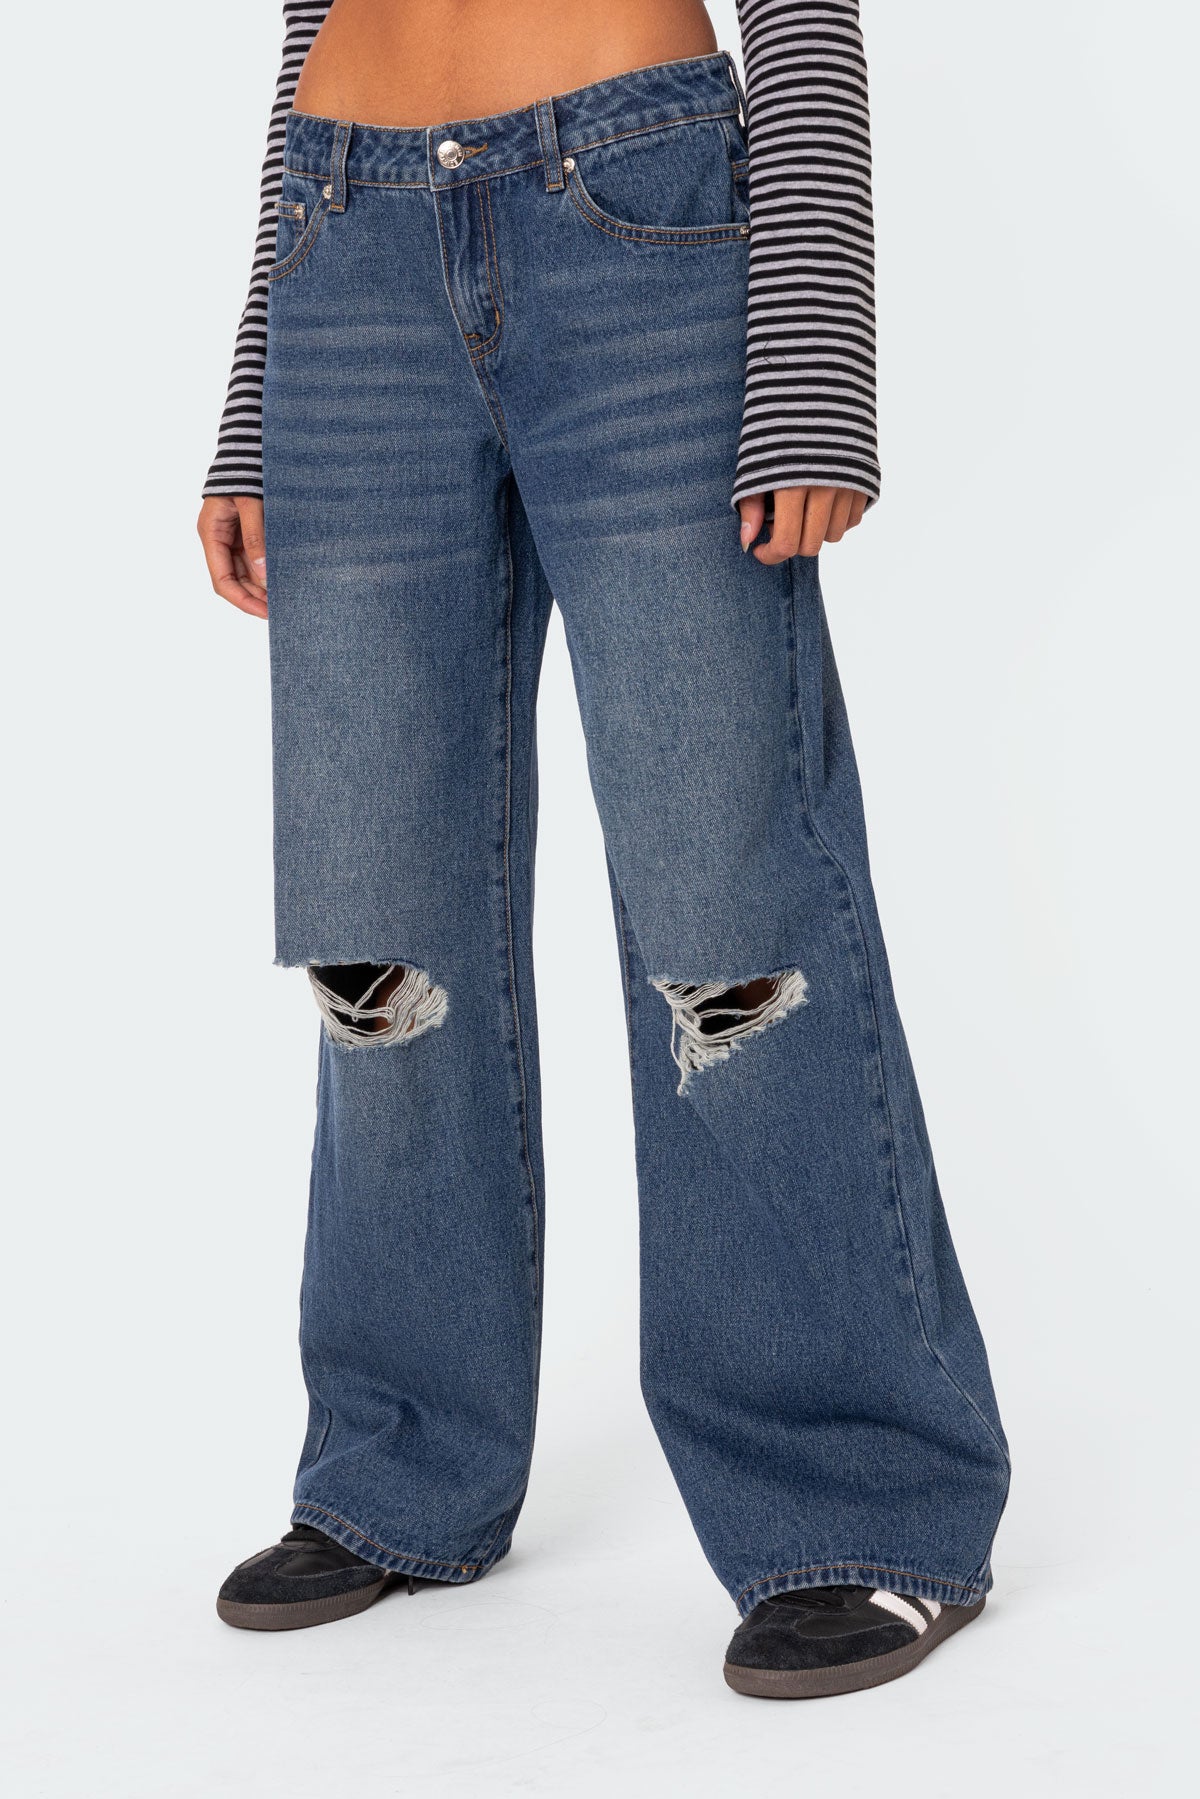 Debbie Distressed Low Rise Jeans